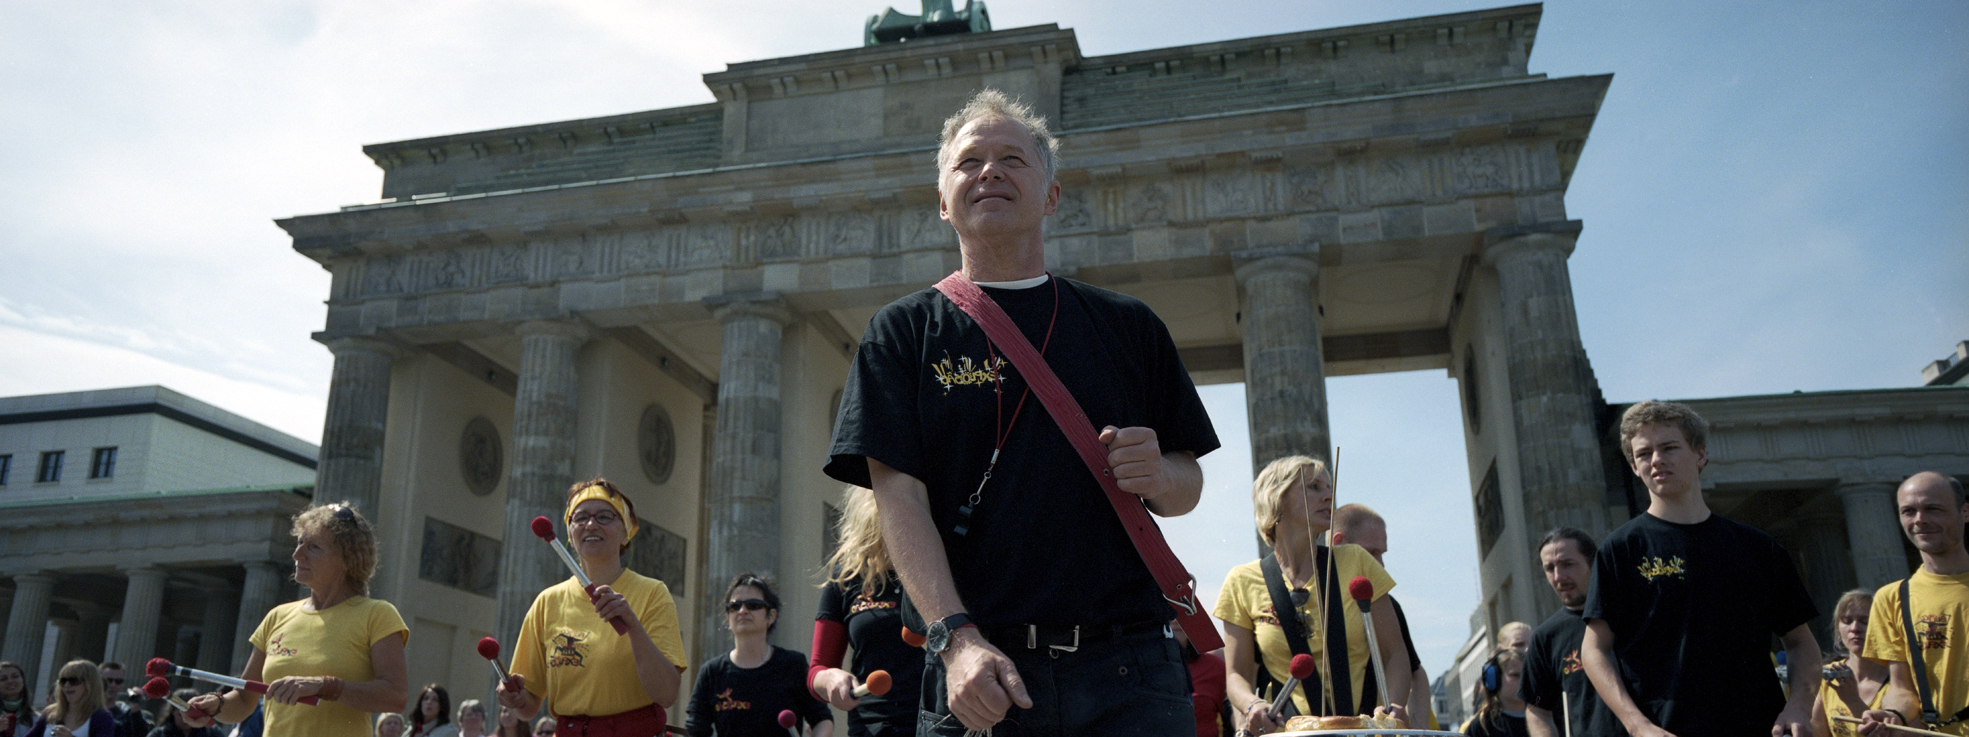 Performance at Brandenburg Gate